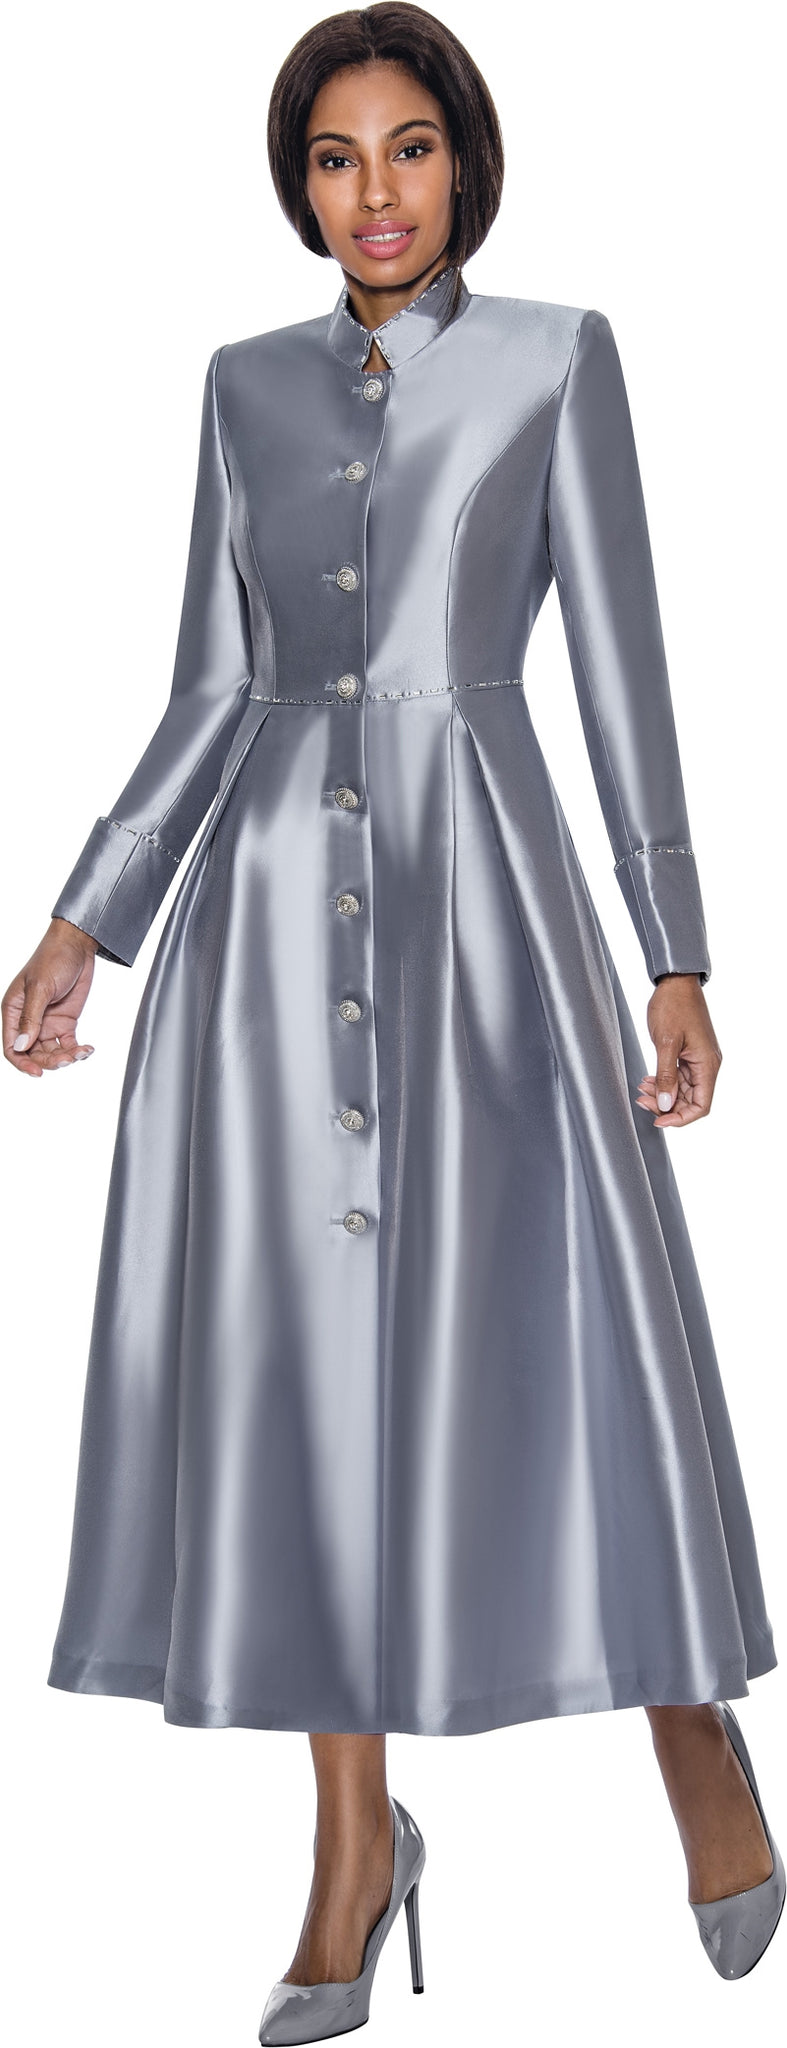 clergy dress